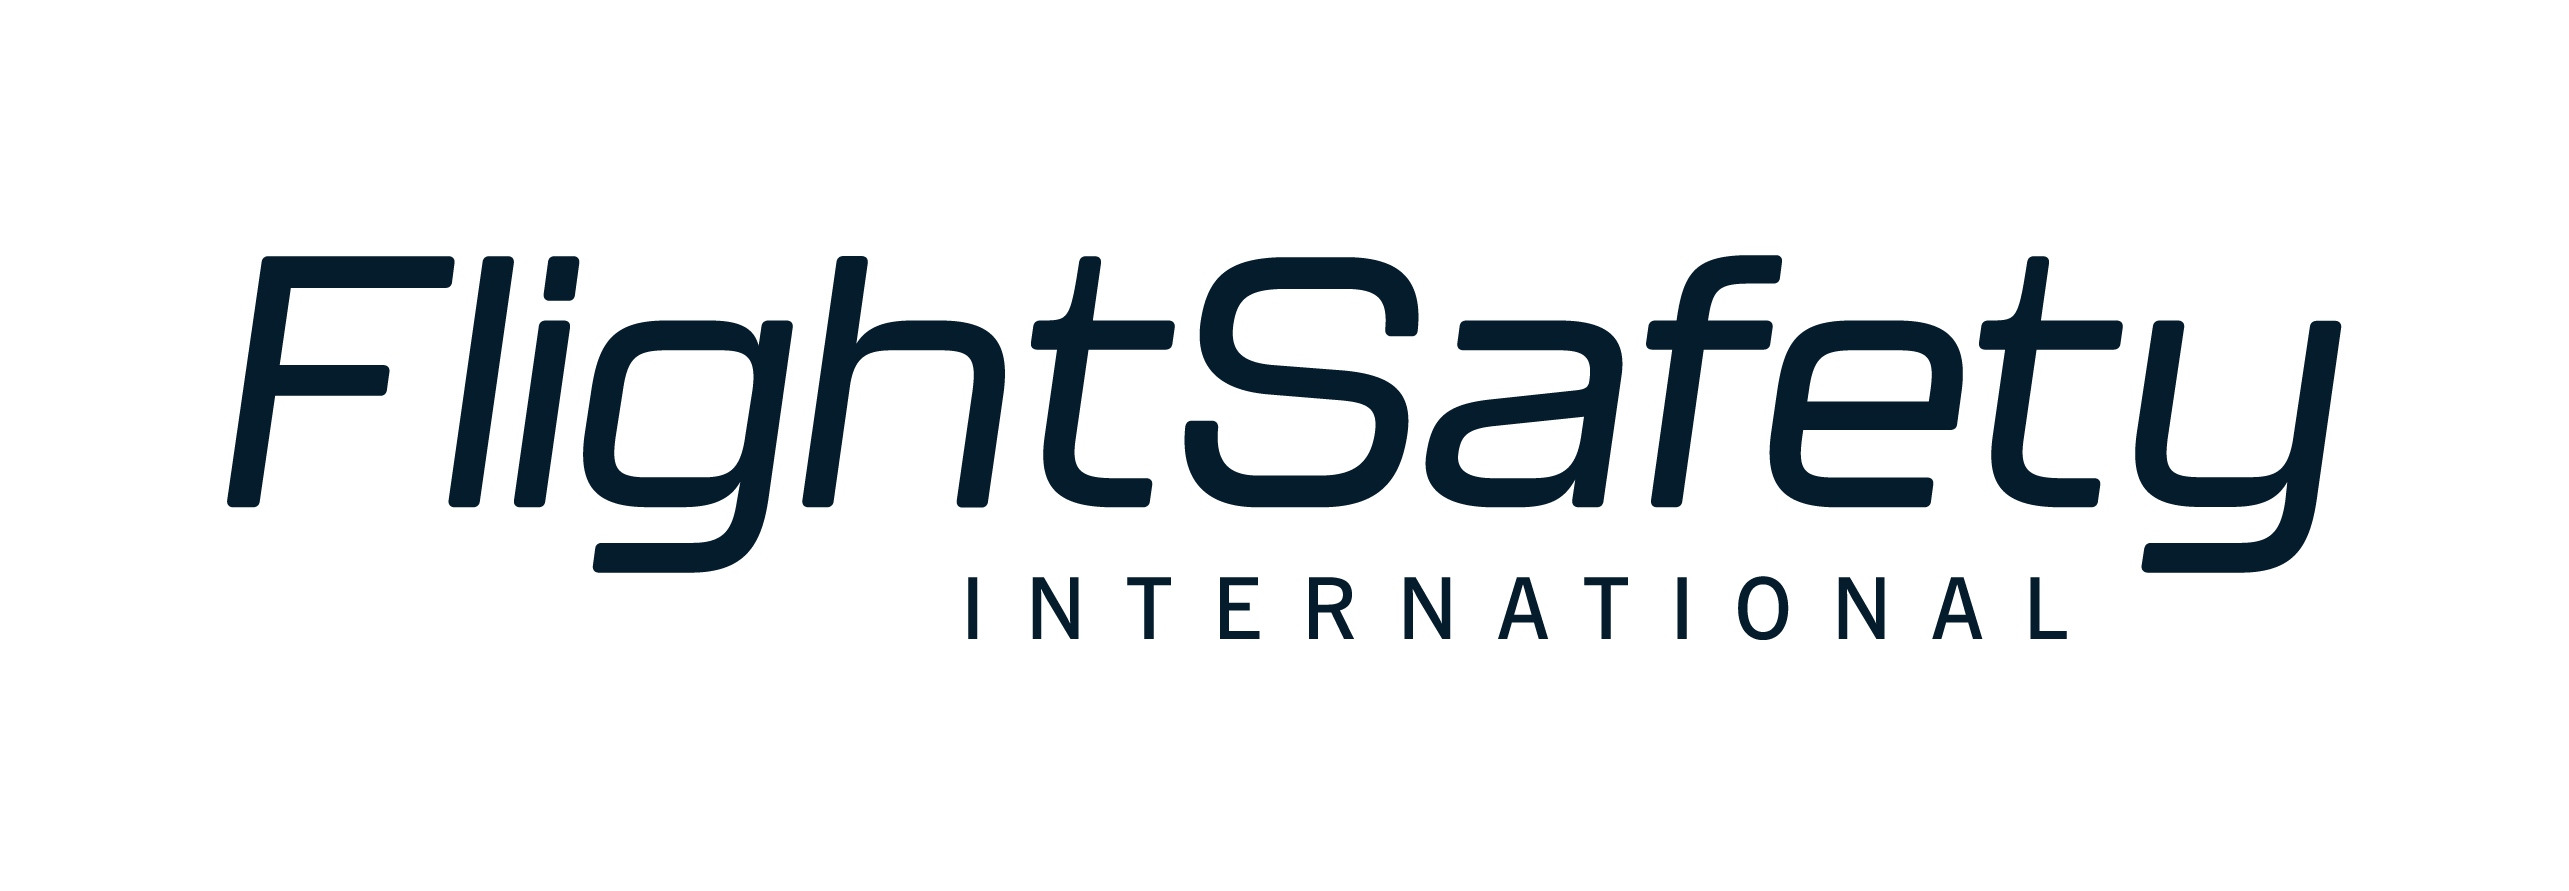 FlightSafety International World-Class Training and Simulation